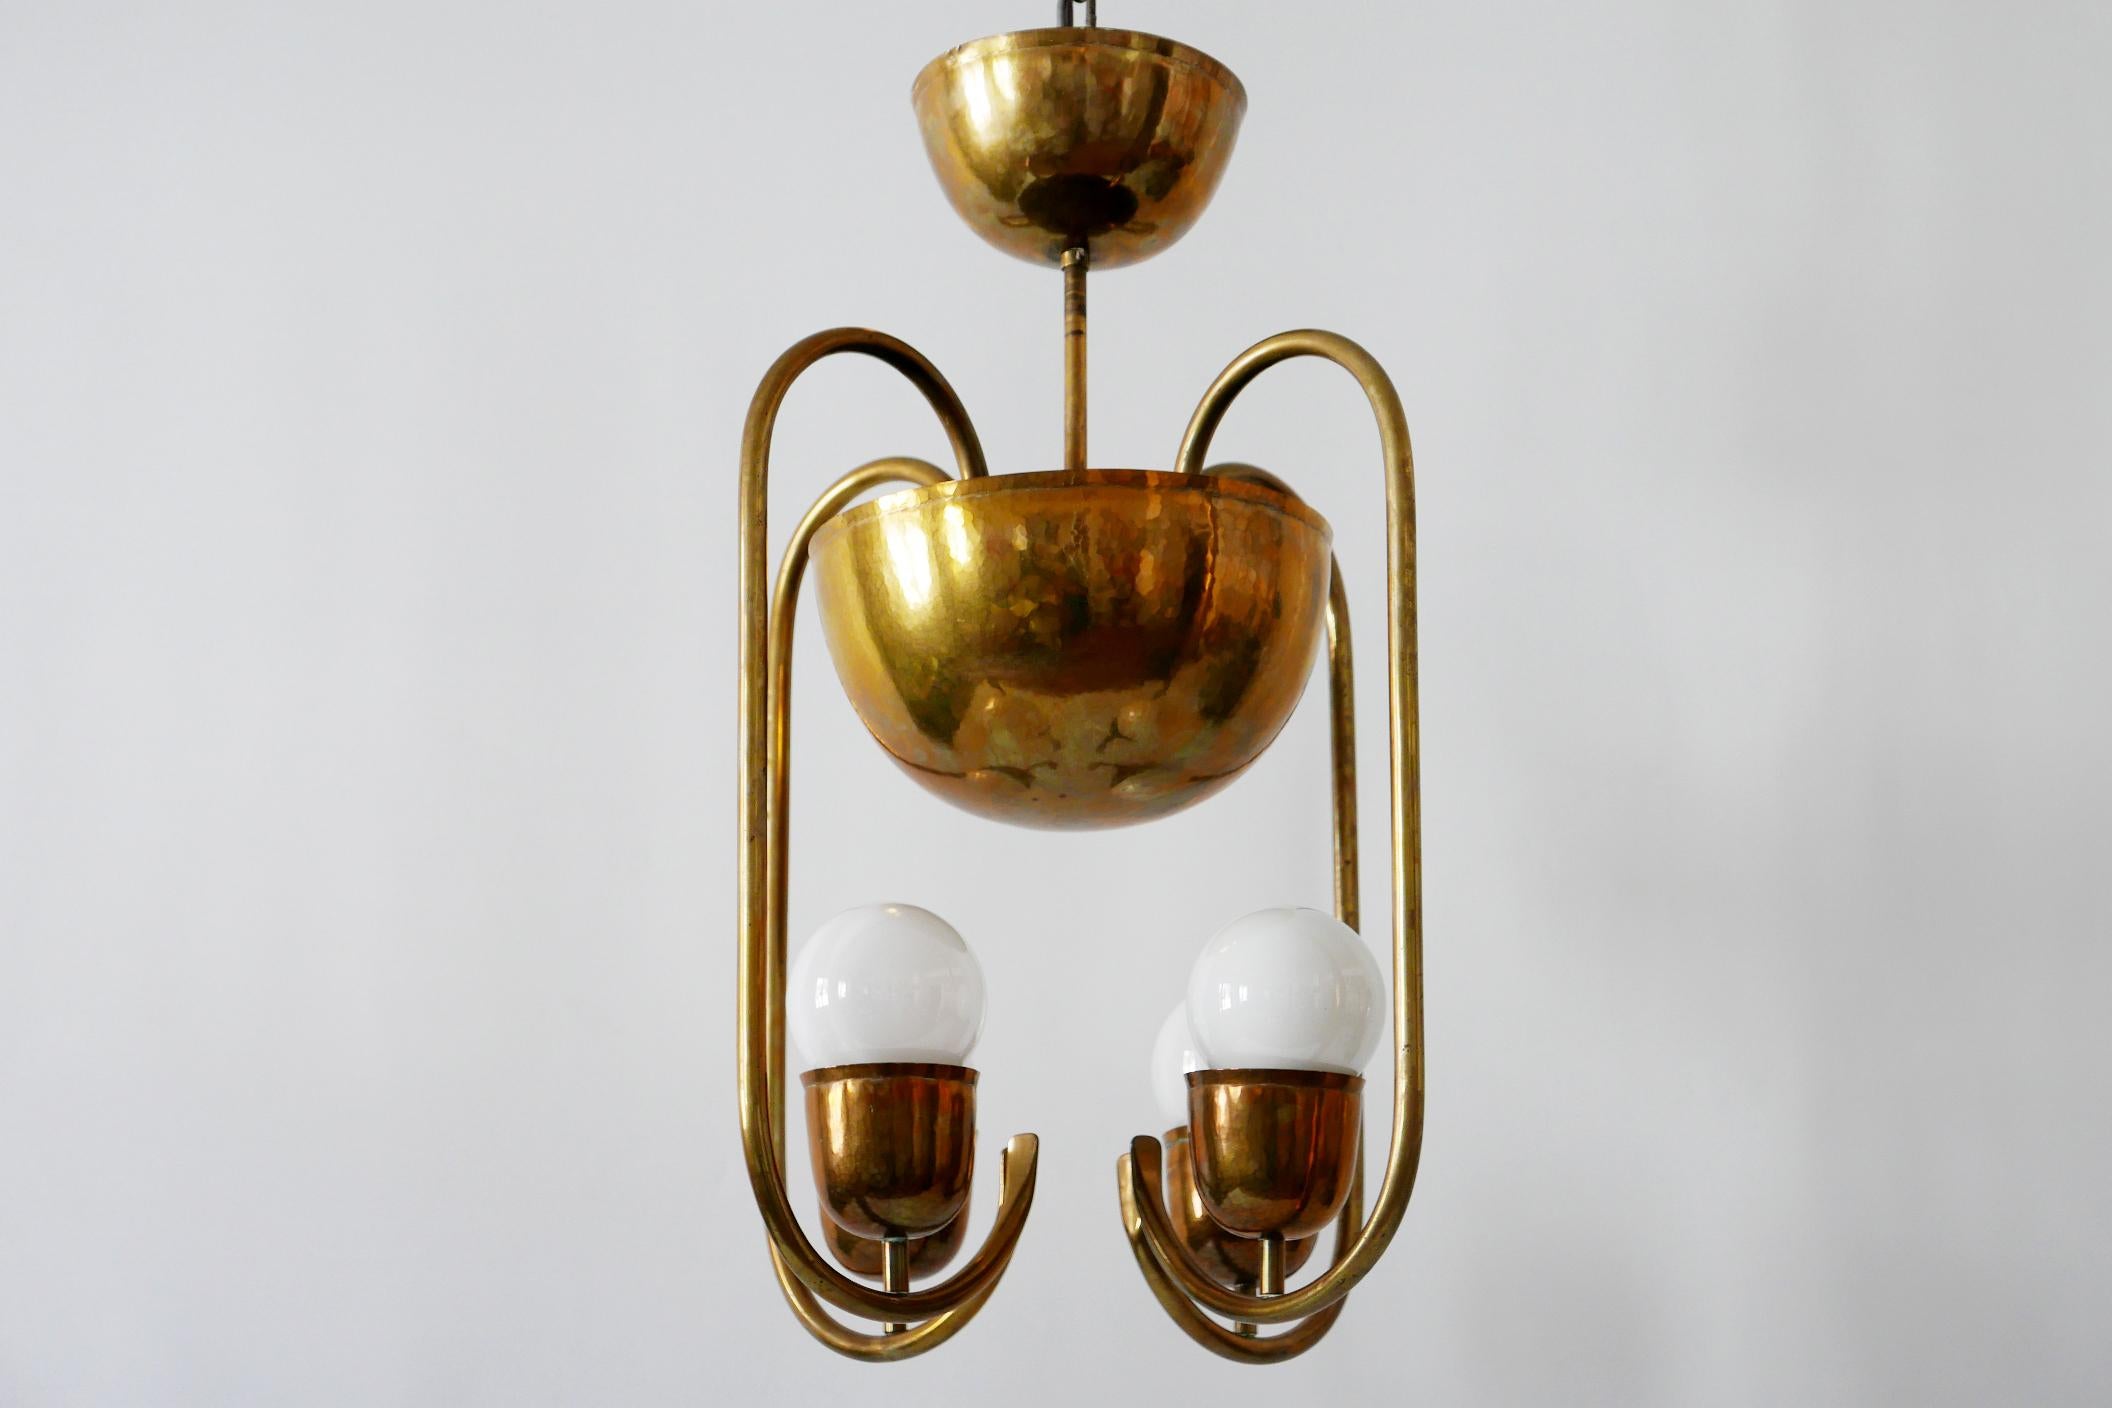 Unique Bauhaus Art Deco Brass Chandelier or Pendant Lamp by Hayno Focken 1930s For Sale 3